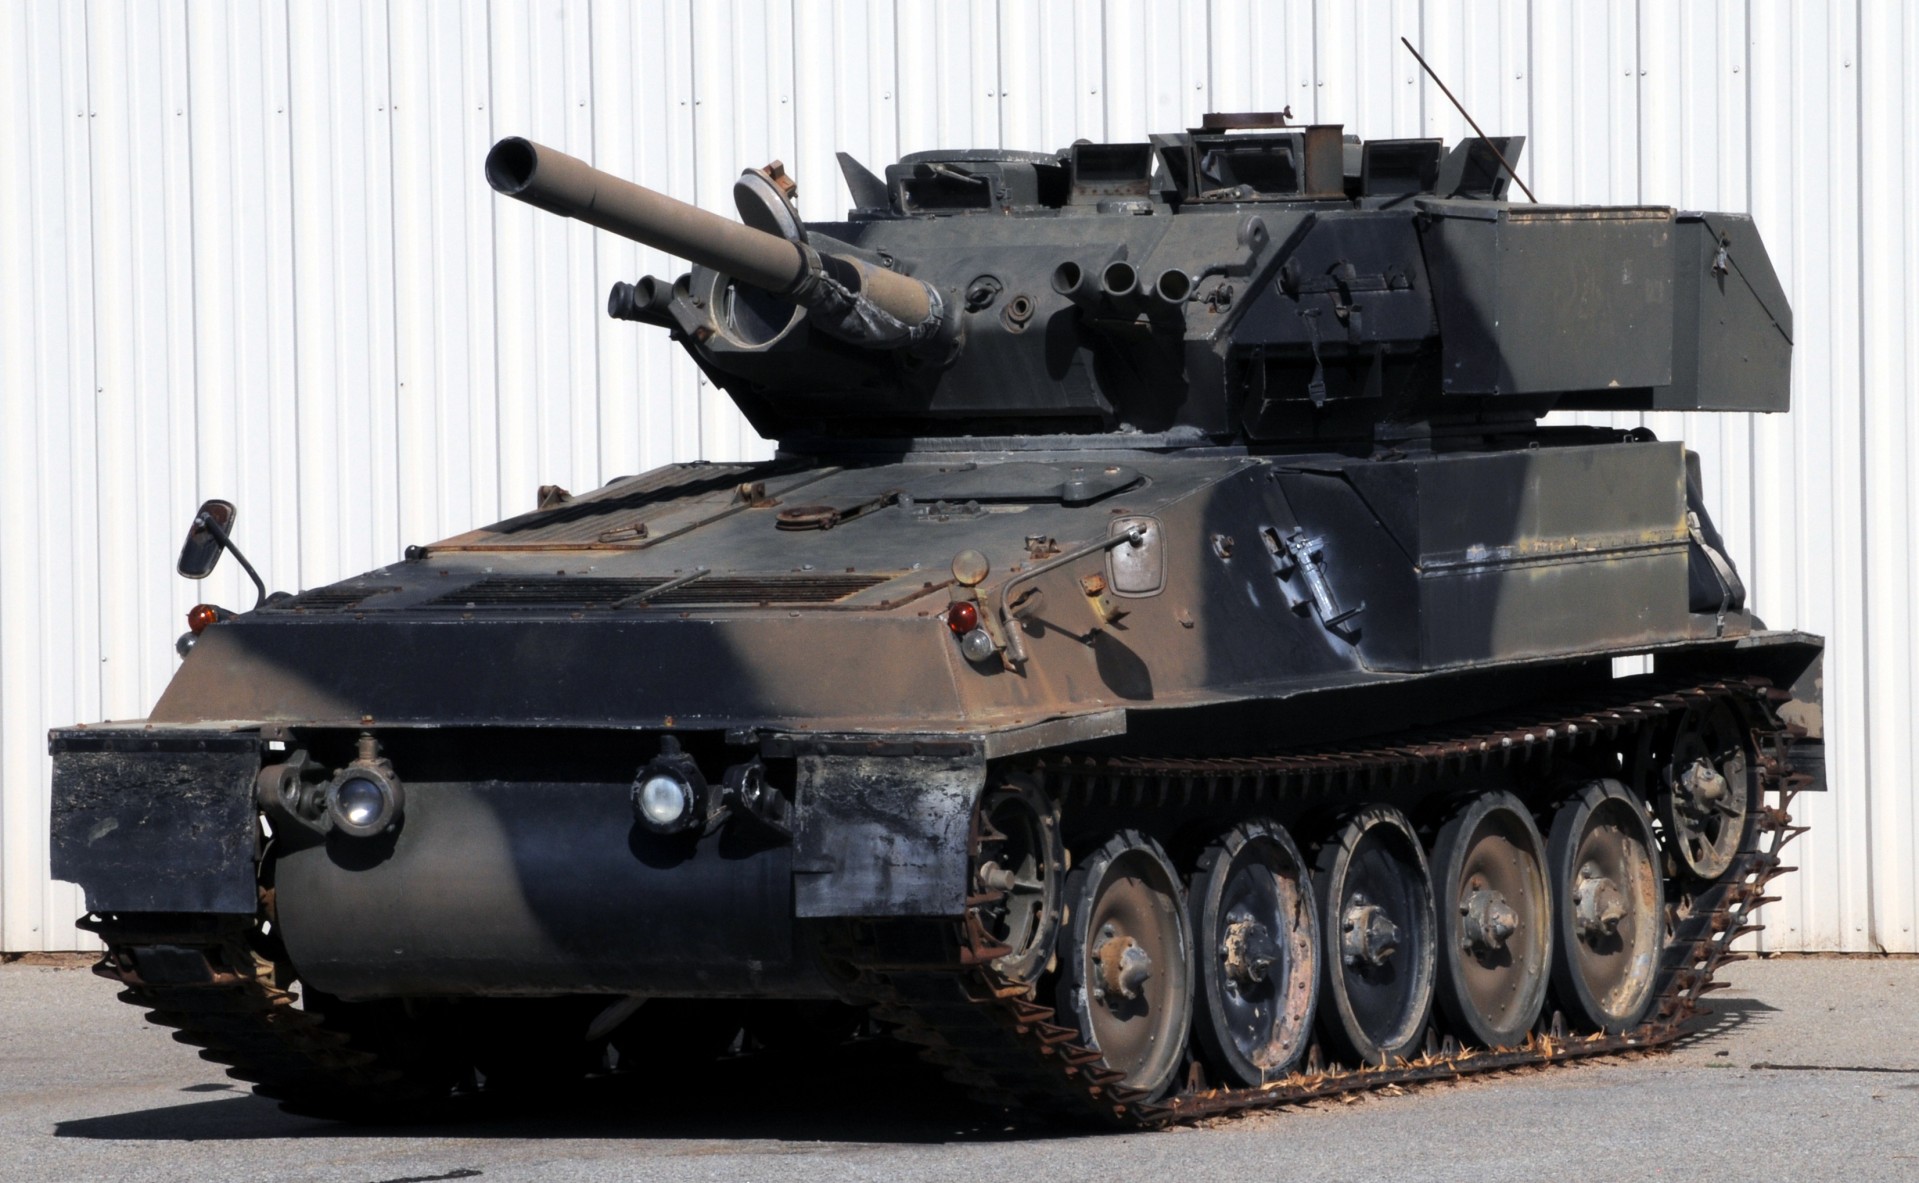 Army War Tank